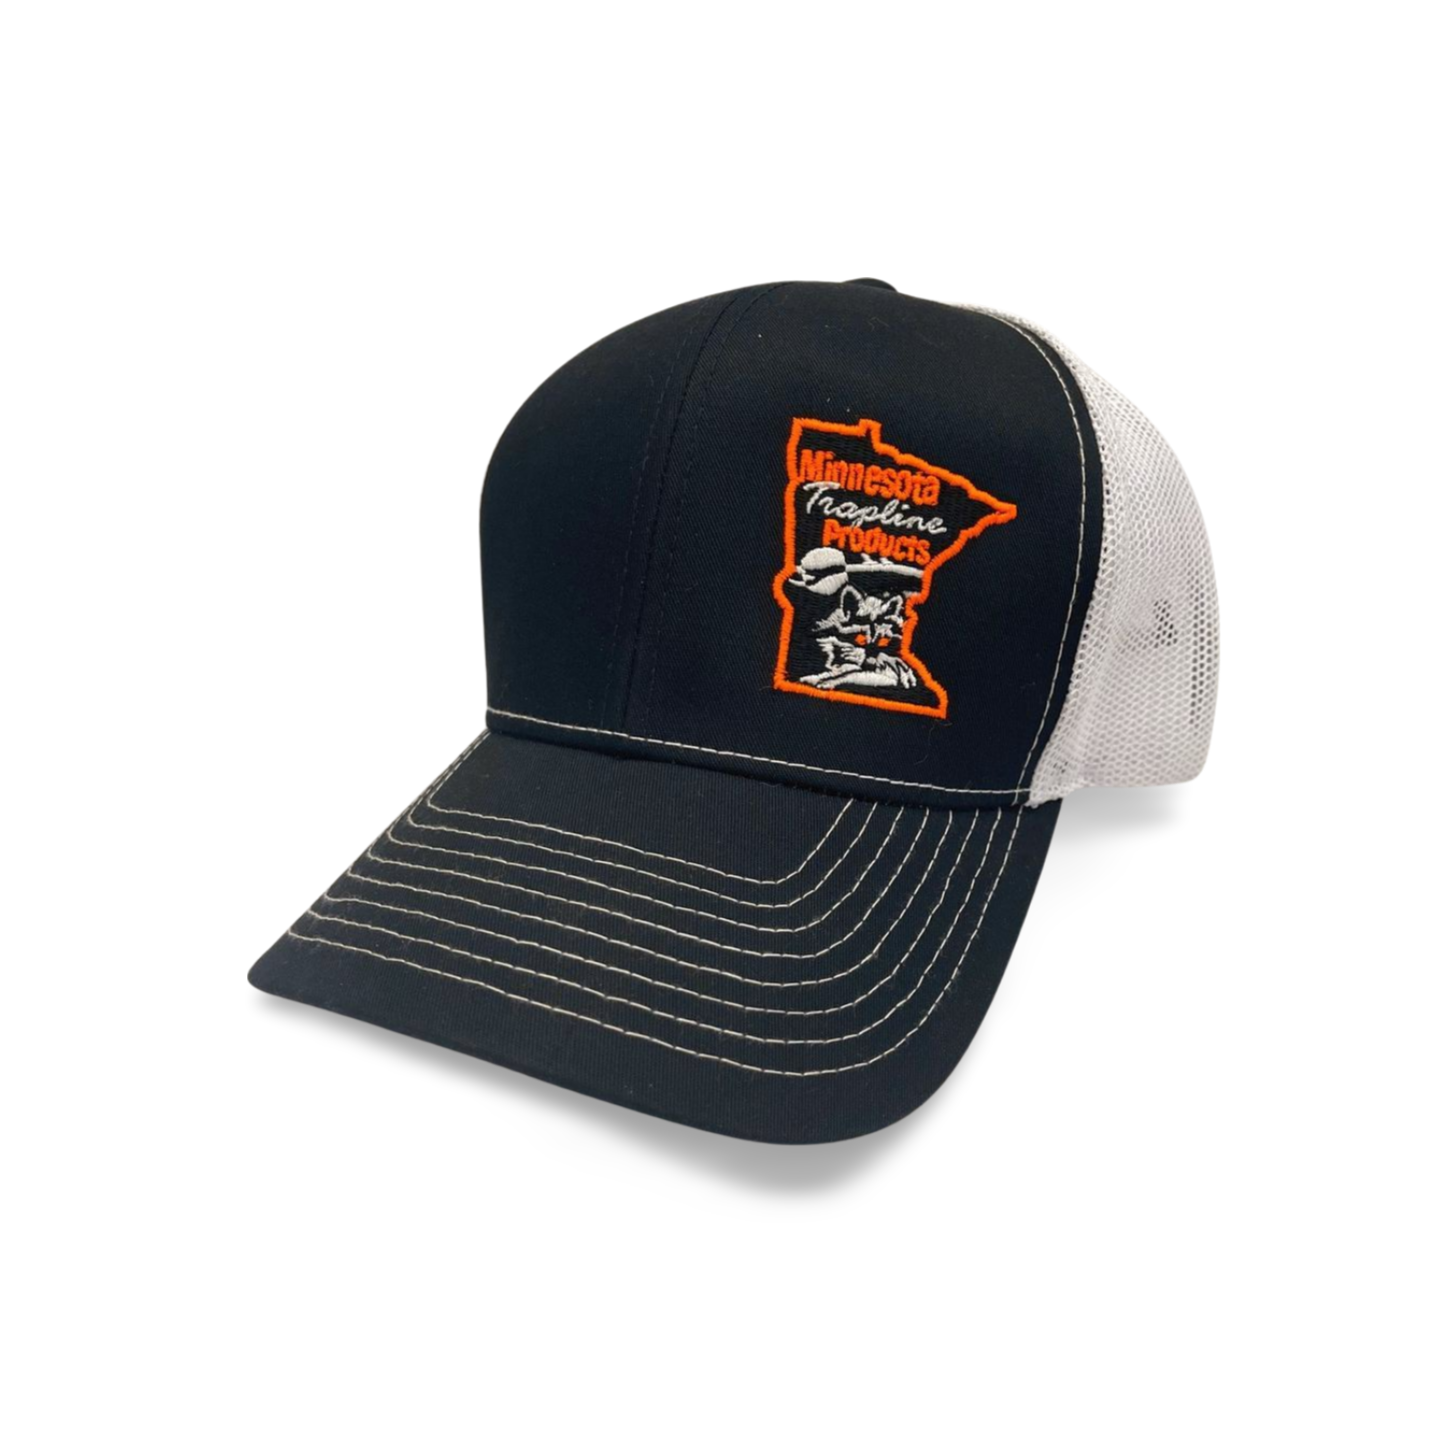 Minnesota Trapline Products Trucker Hat - Black and White